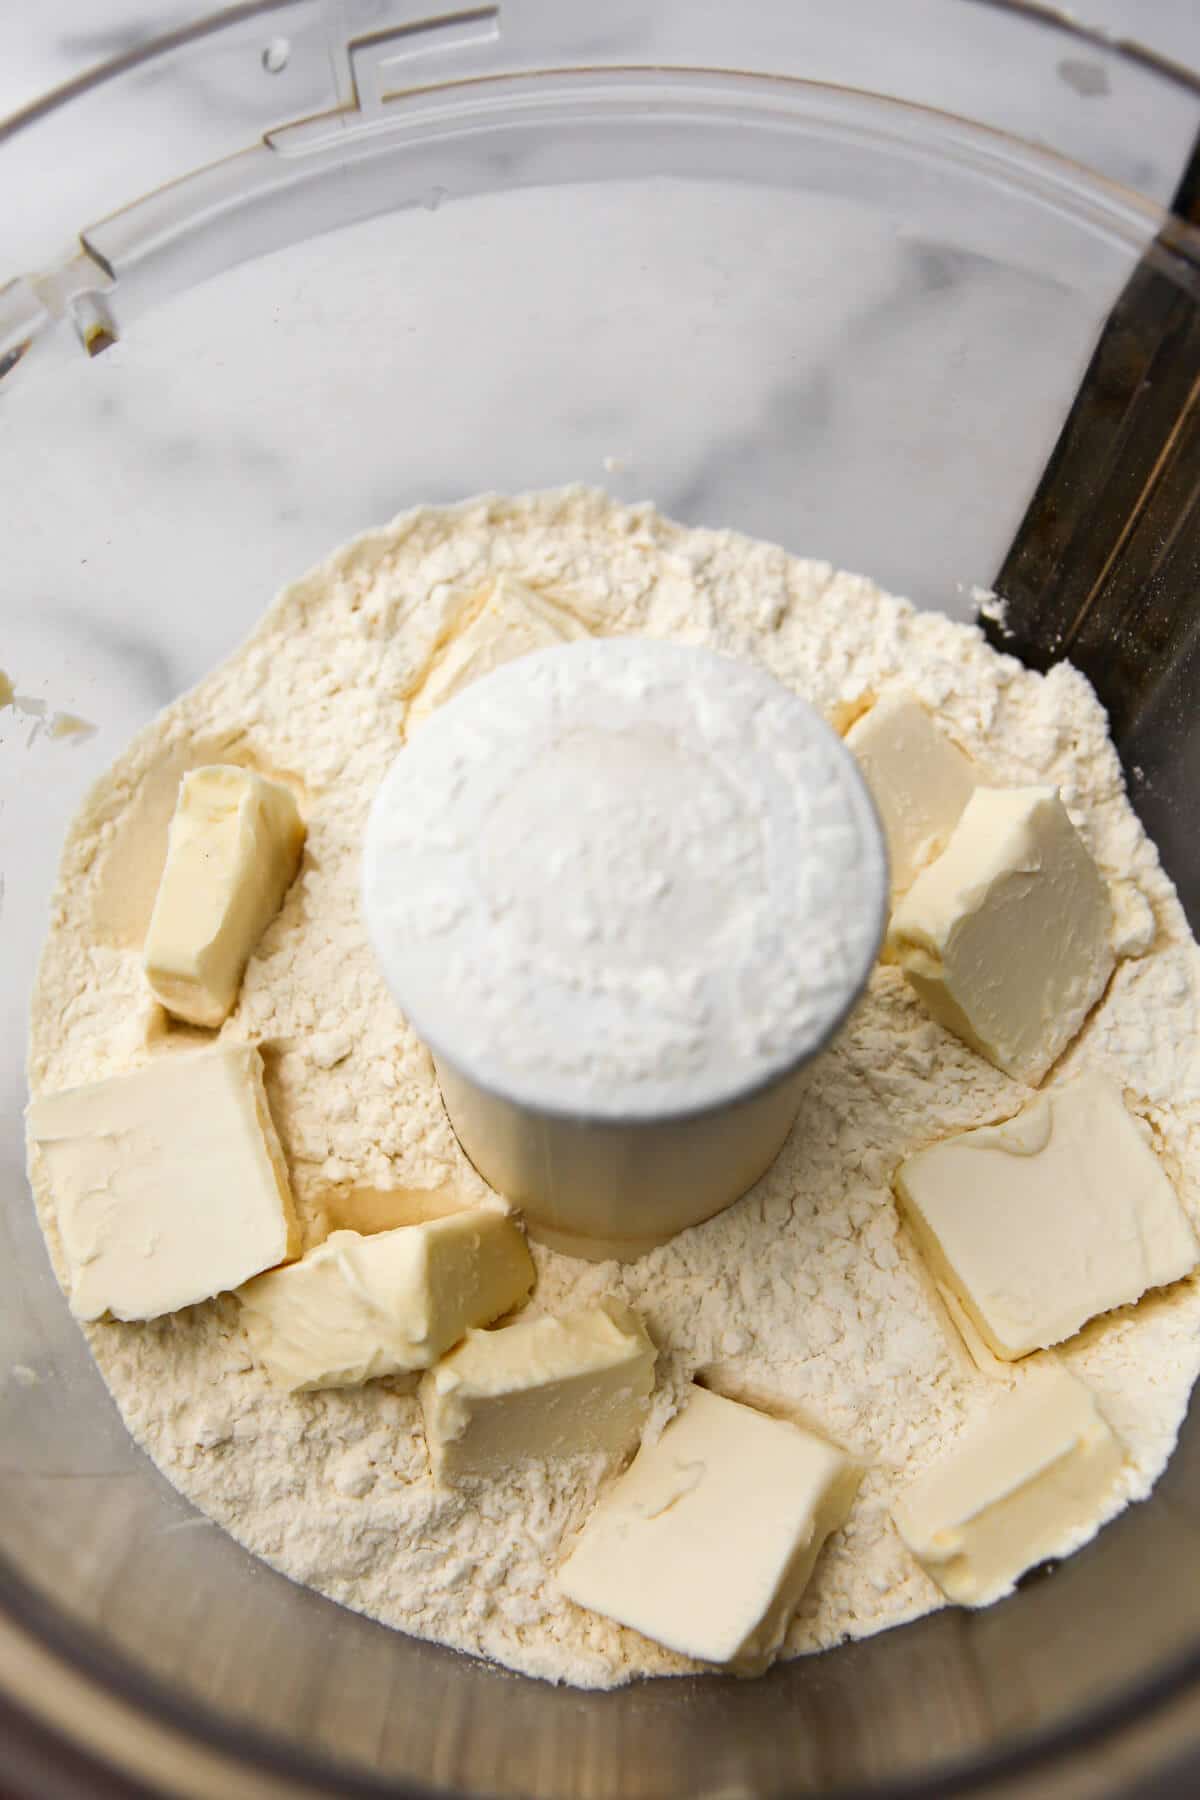 Flour, butter and salt in a food processor to make vegan emanada dough.